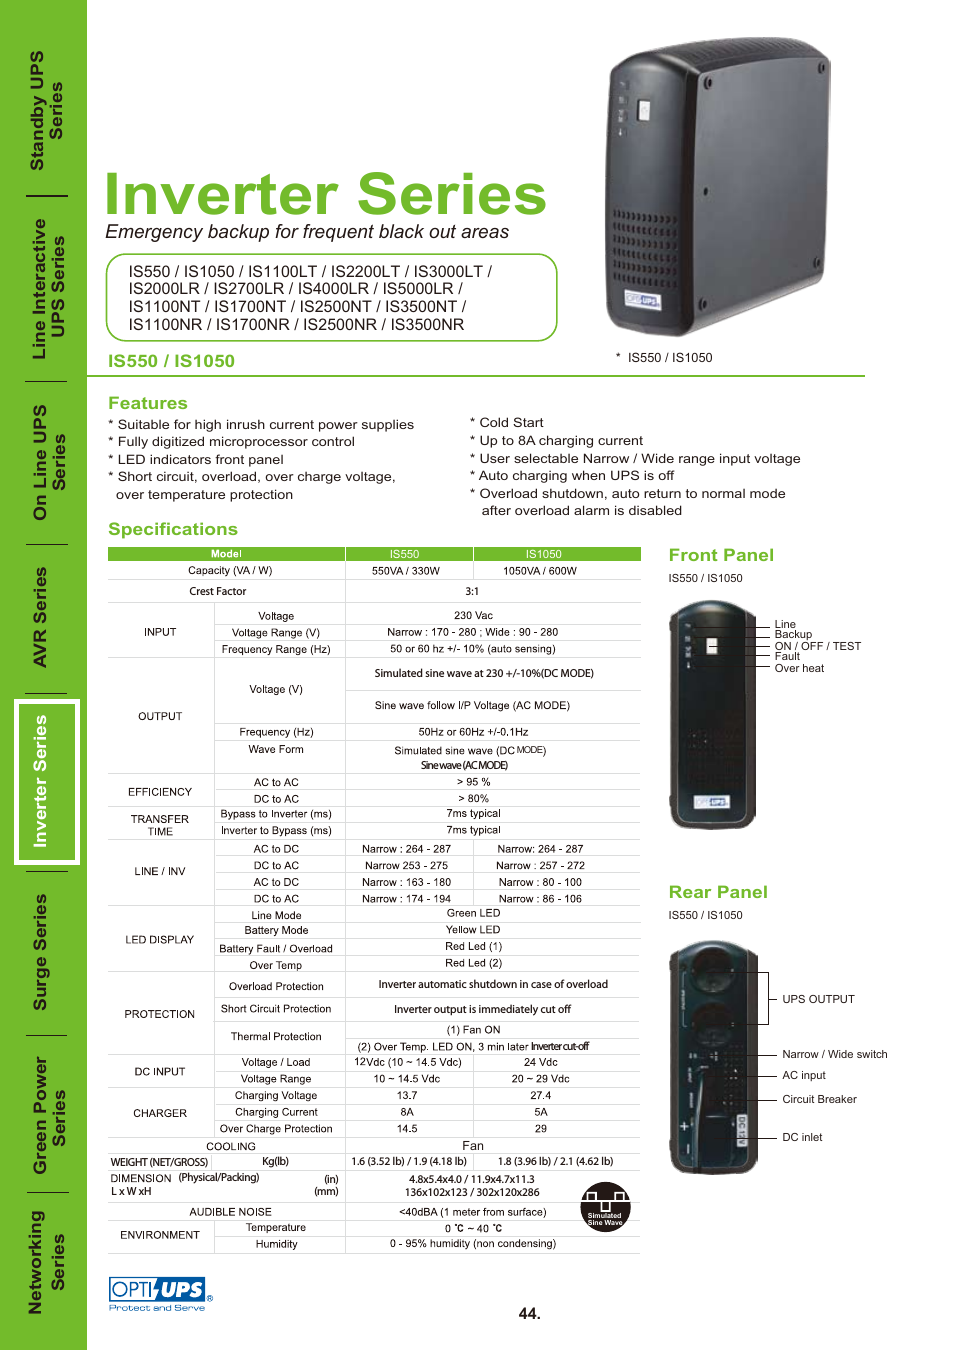 Inverter Series IS4000LR